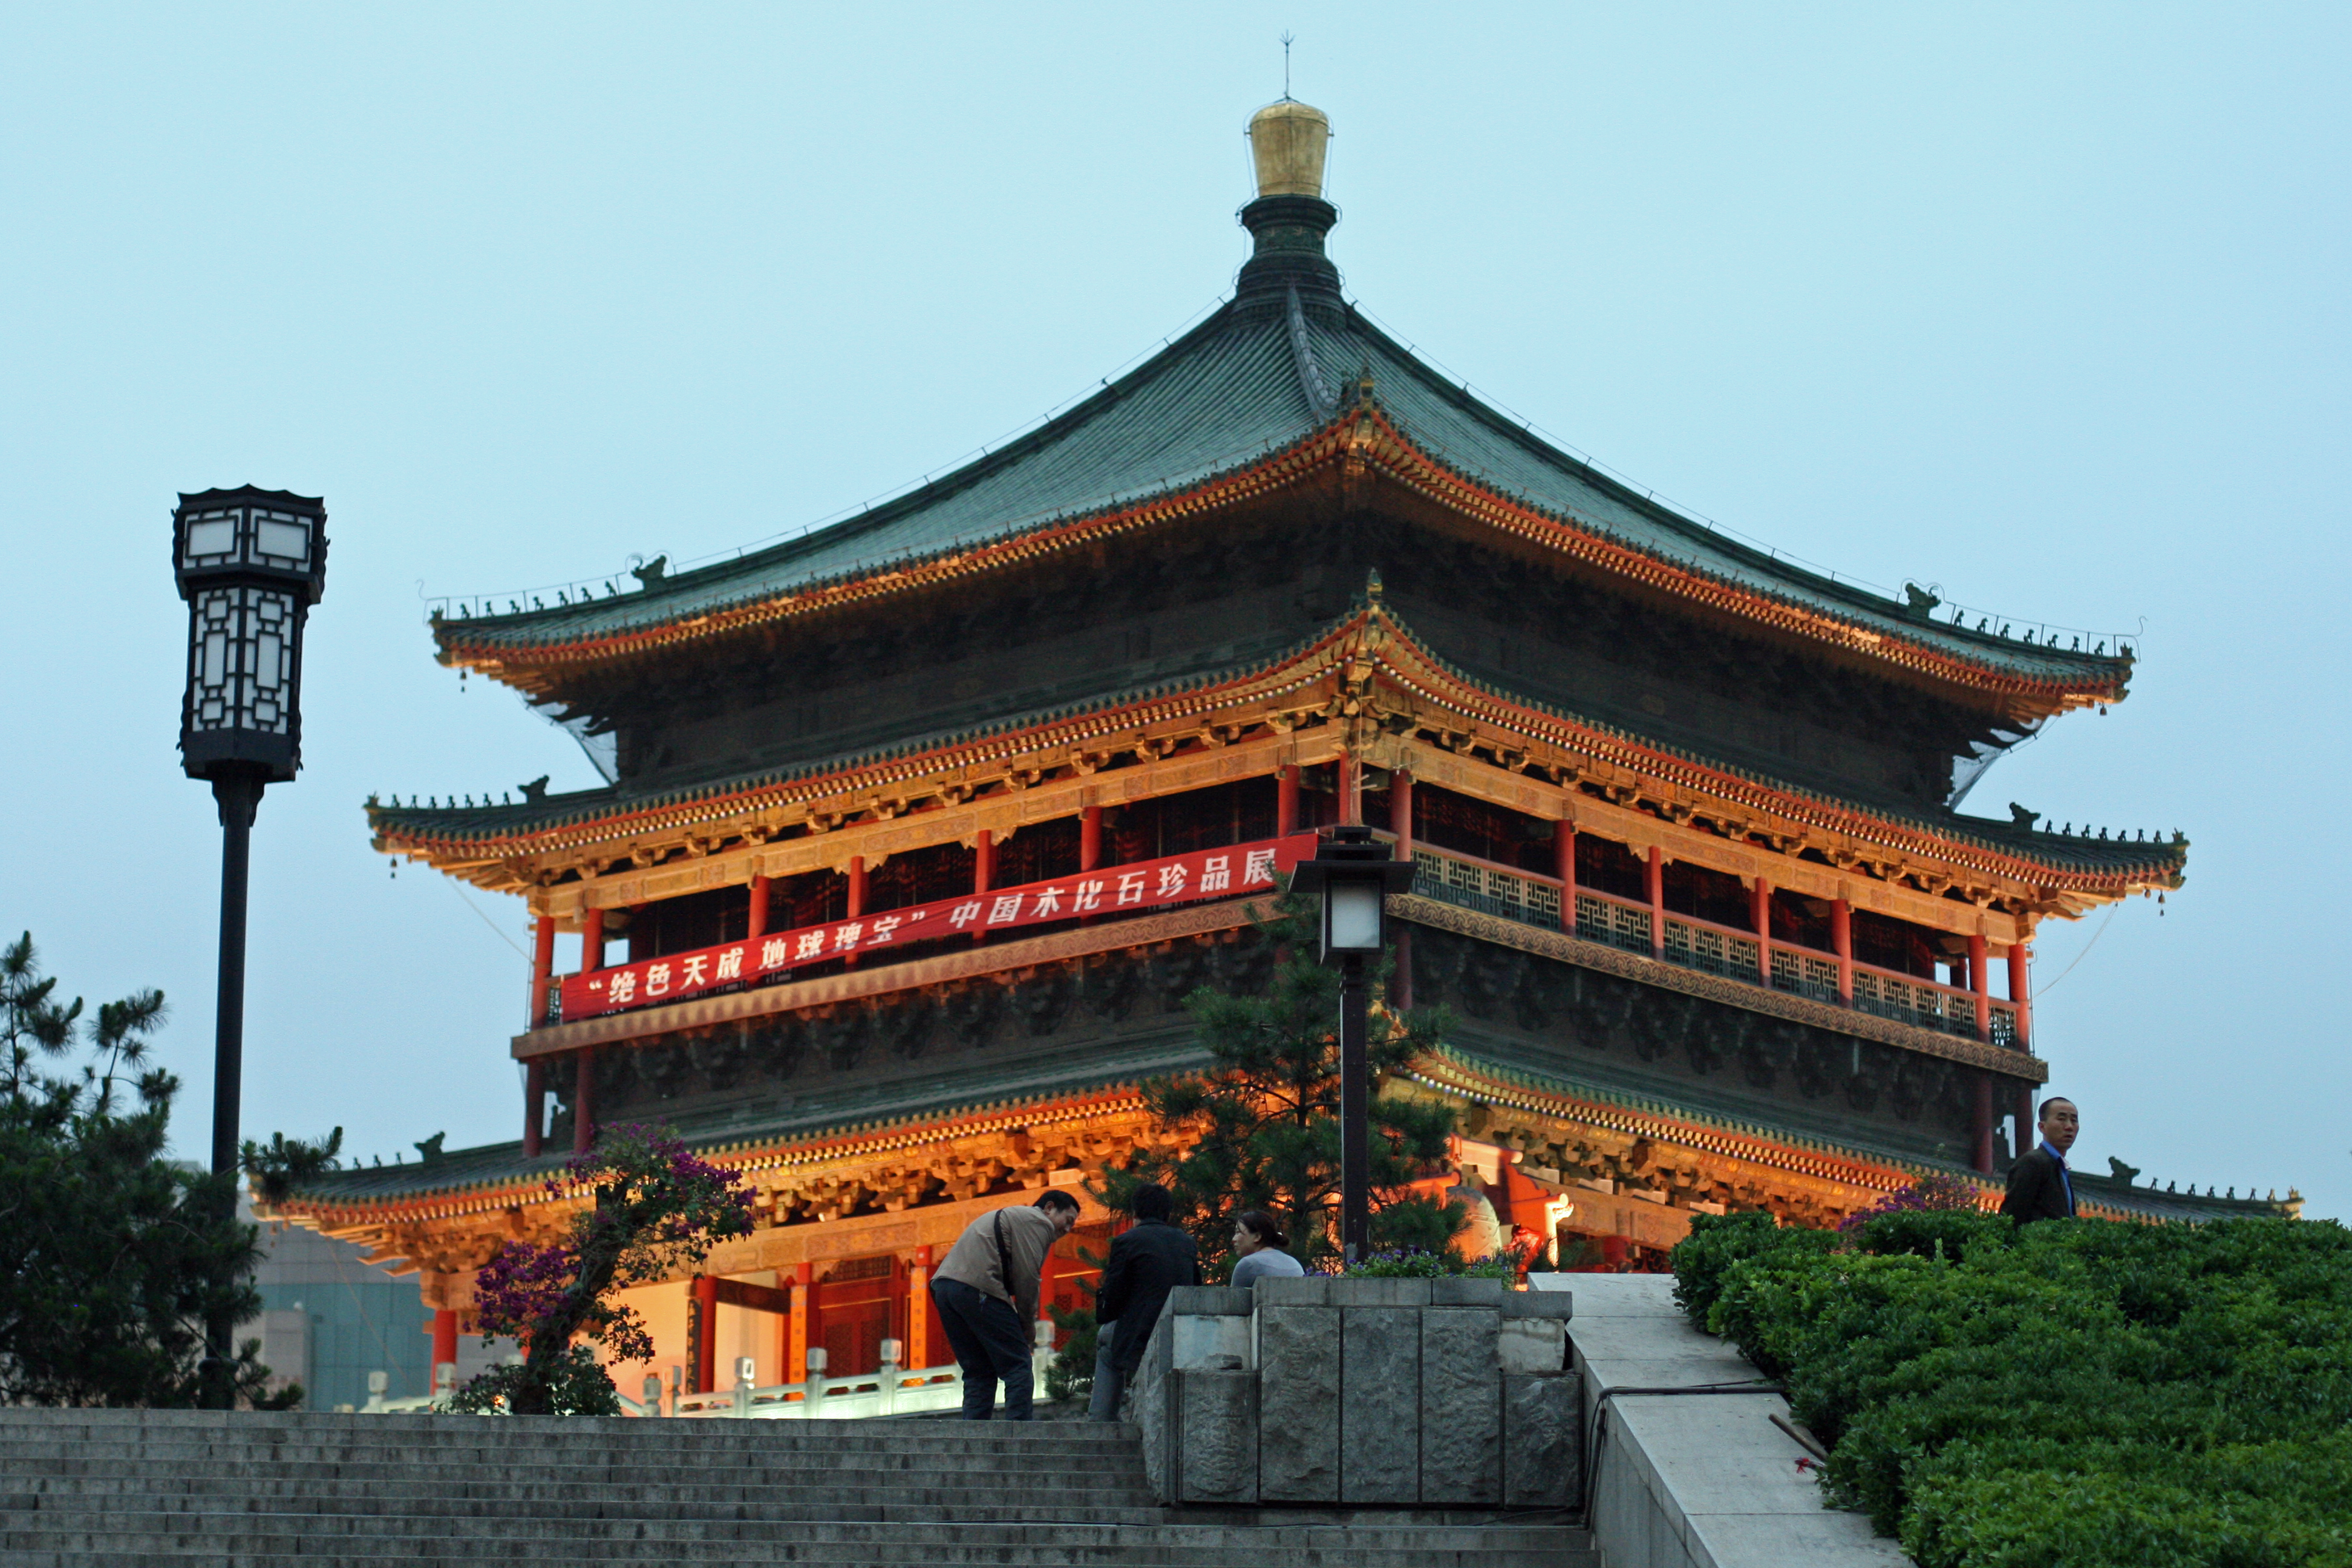 Bell Tower Of Xi'an #10